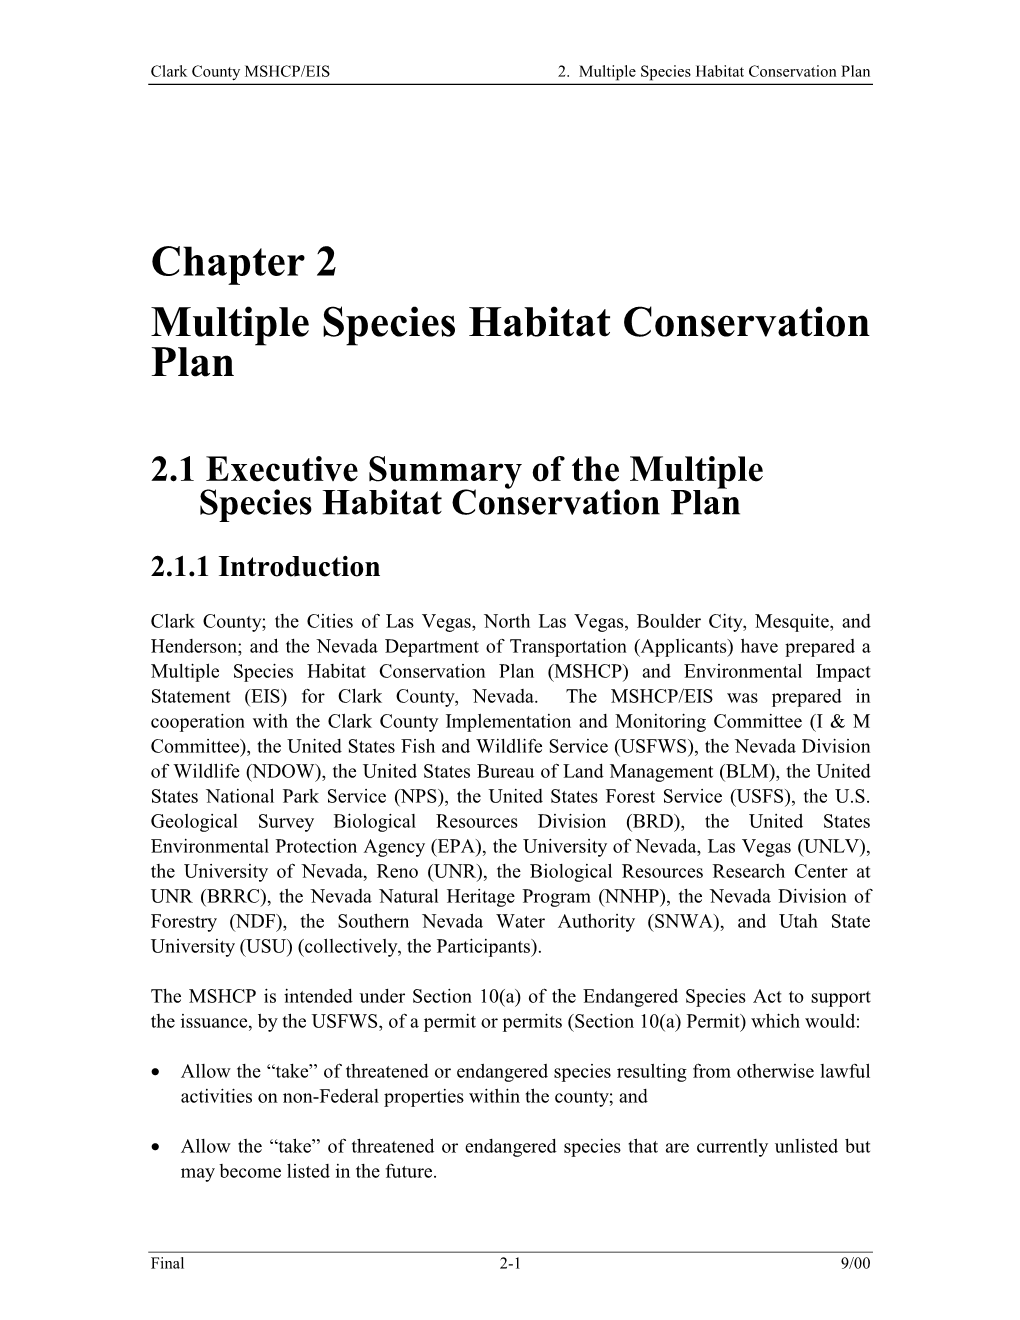 Chapter 2 Multiple Species Habitat Conservation Plan